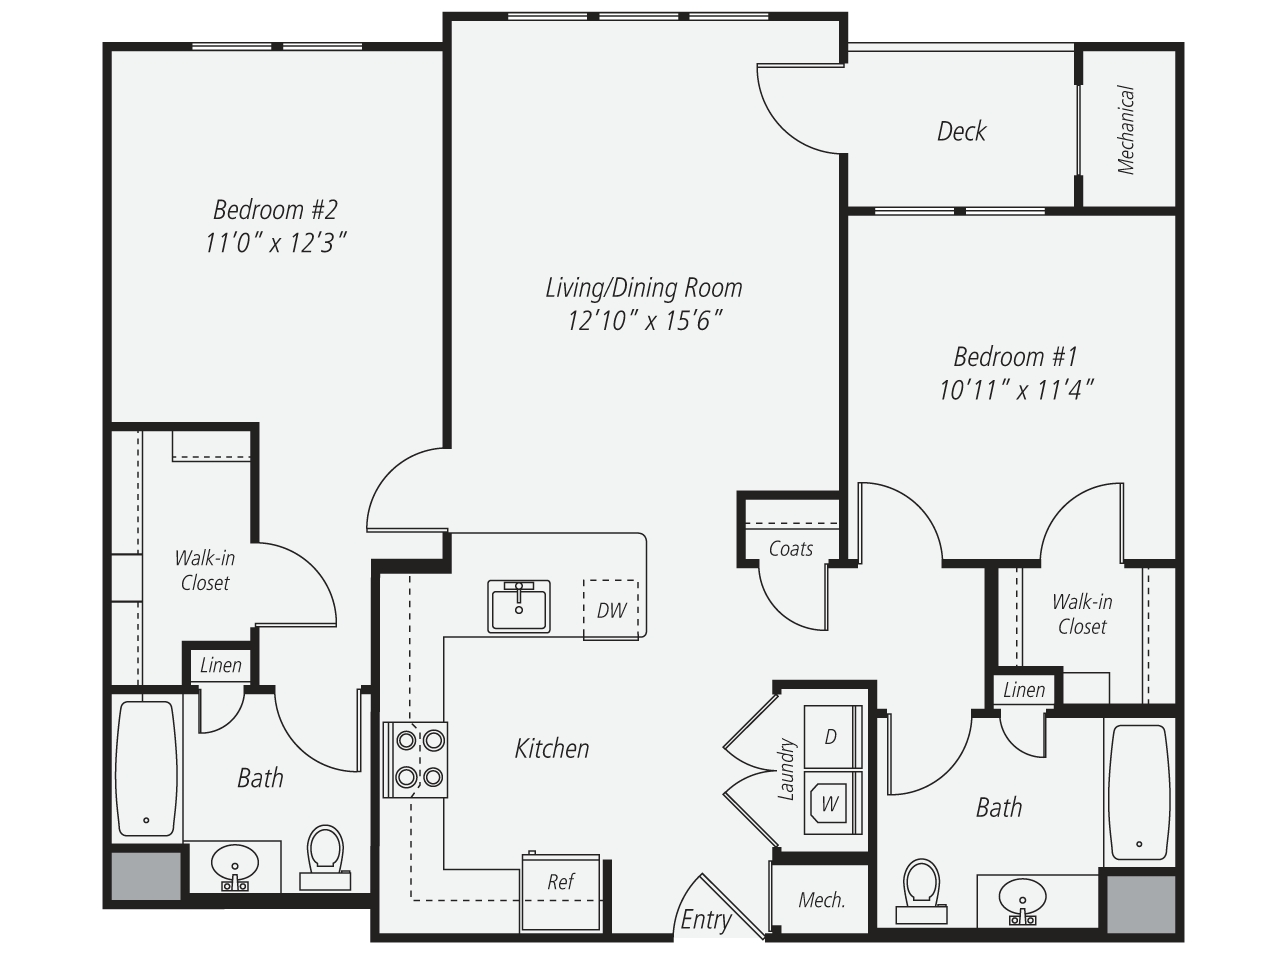 Floorplan for Apartment #115, 2 bedroom unit at Halstead Norwalk